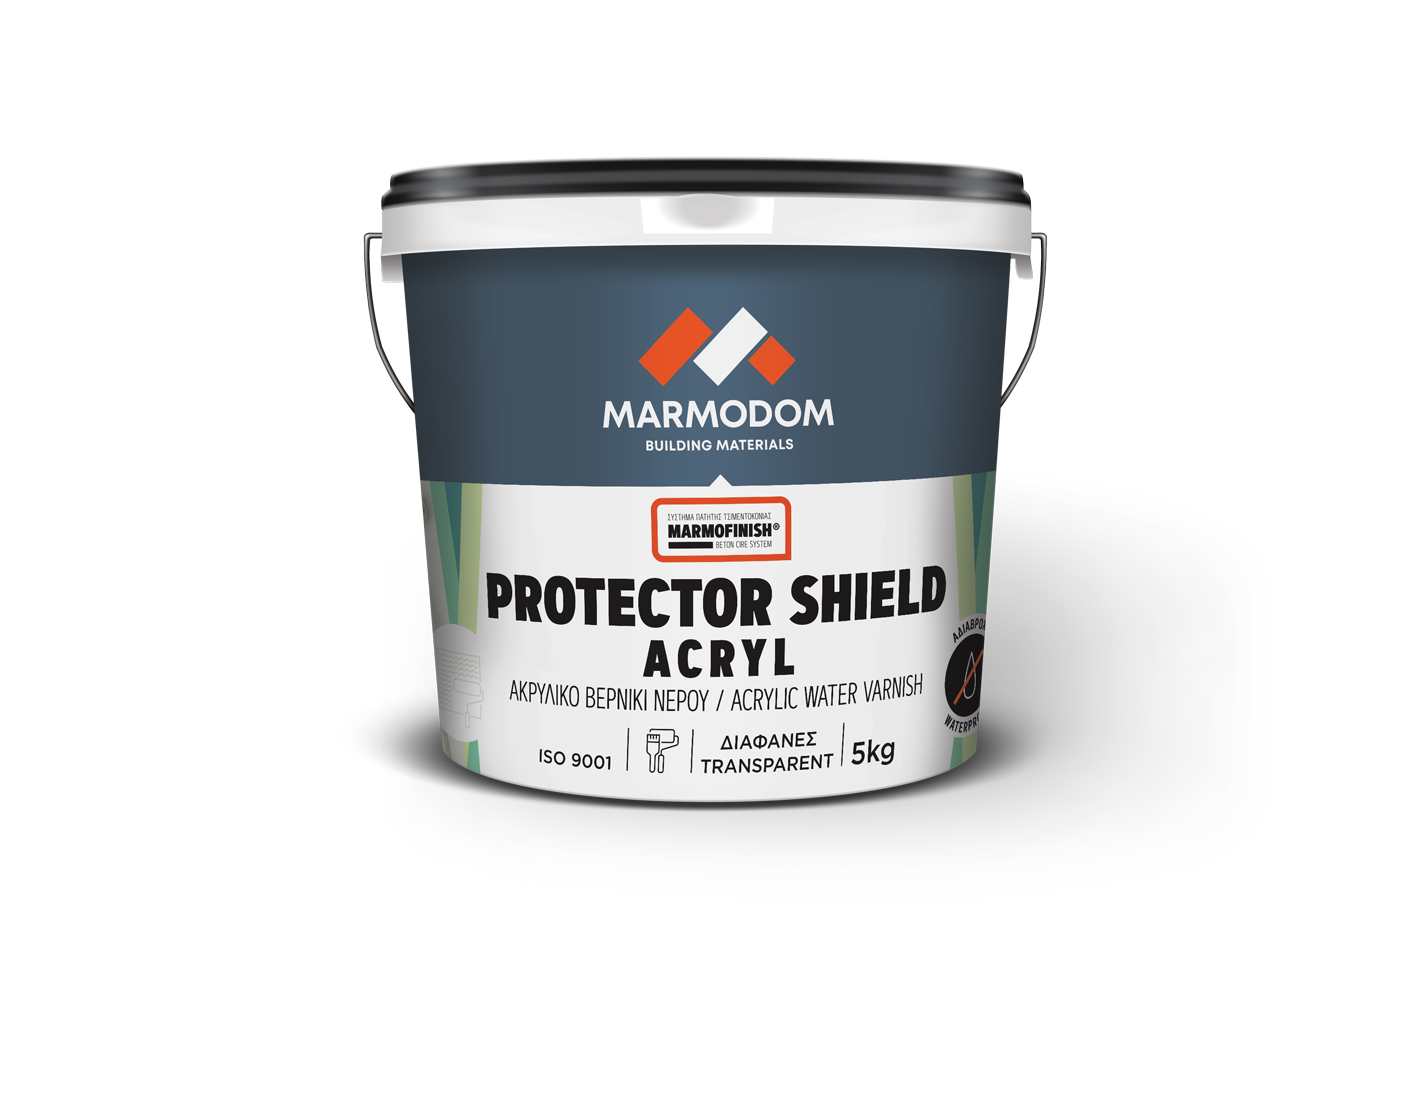 Marmodom PROTECTOR SHIELD ACRYL 1kg Protective acrylic water varnish